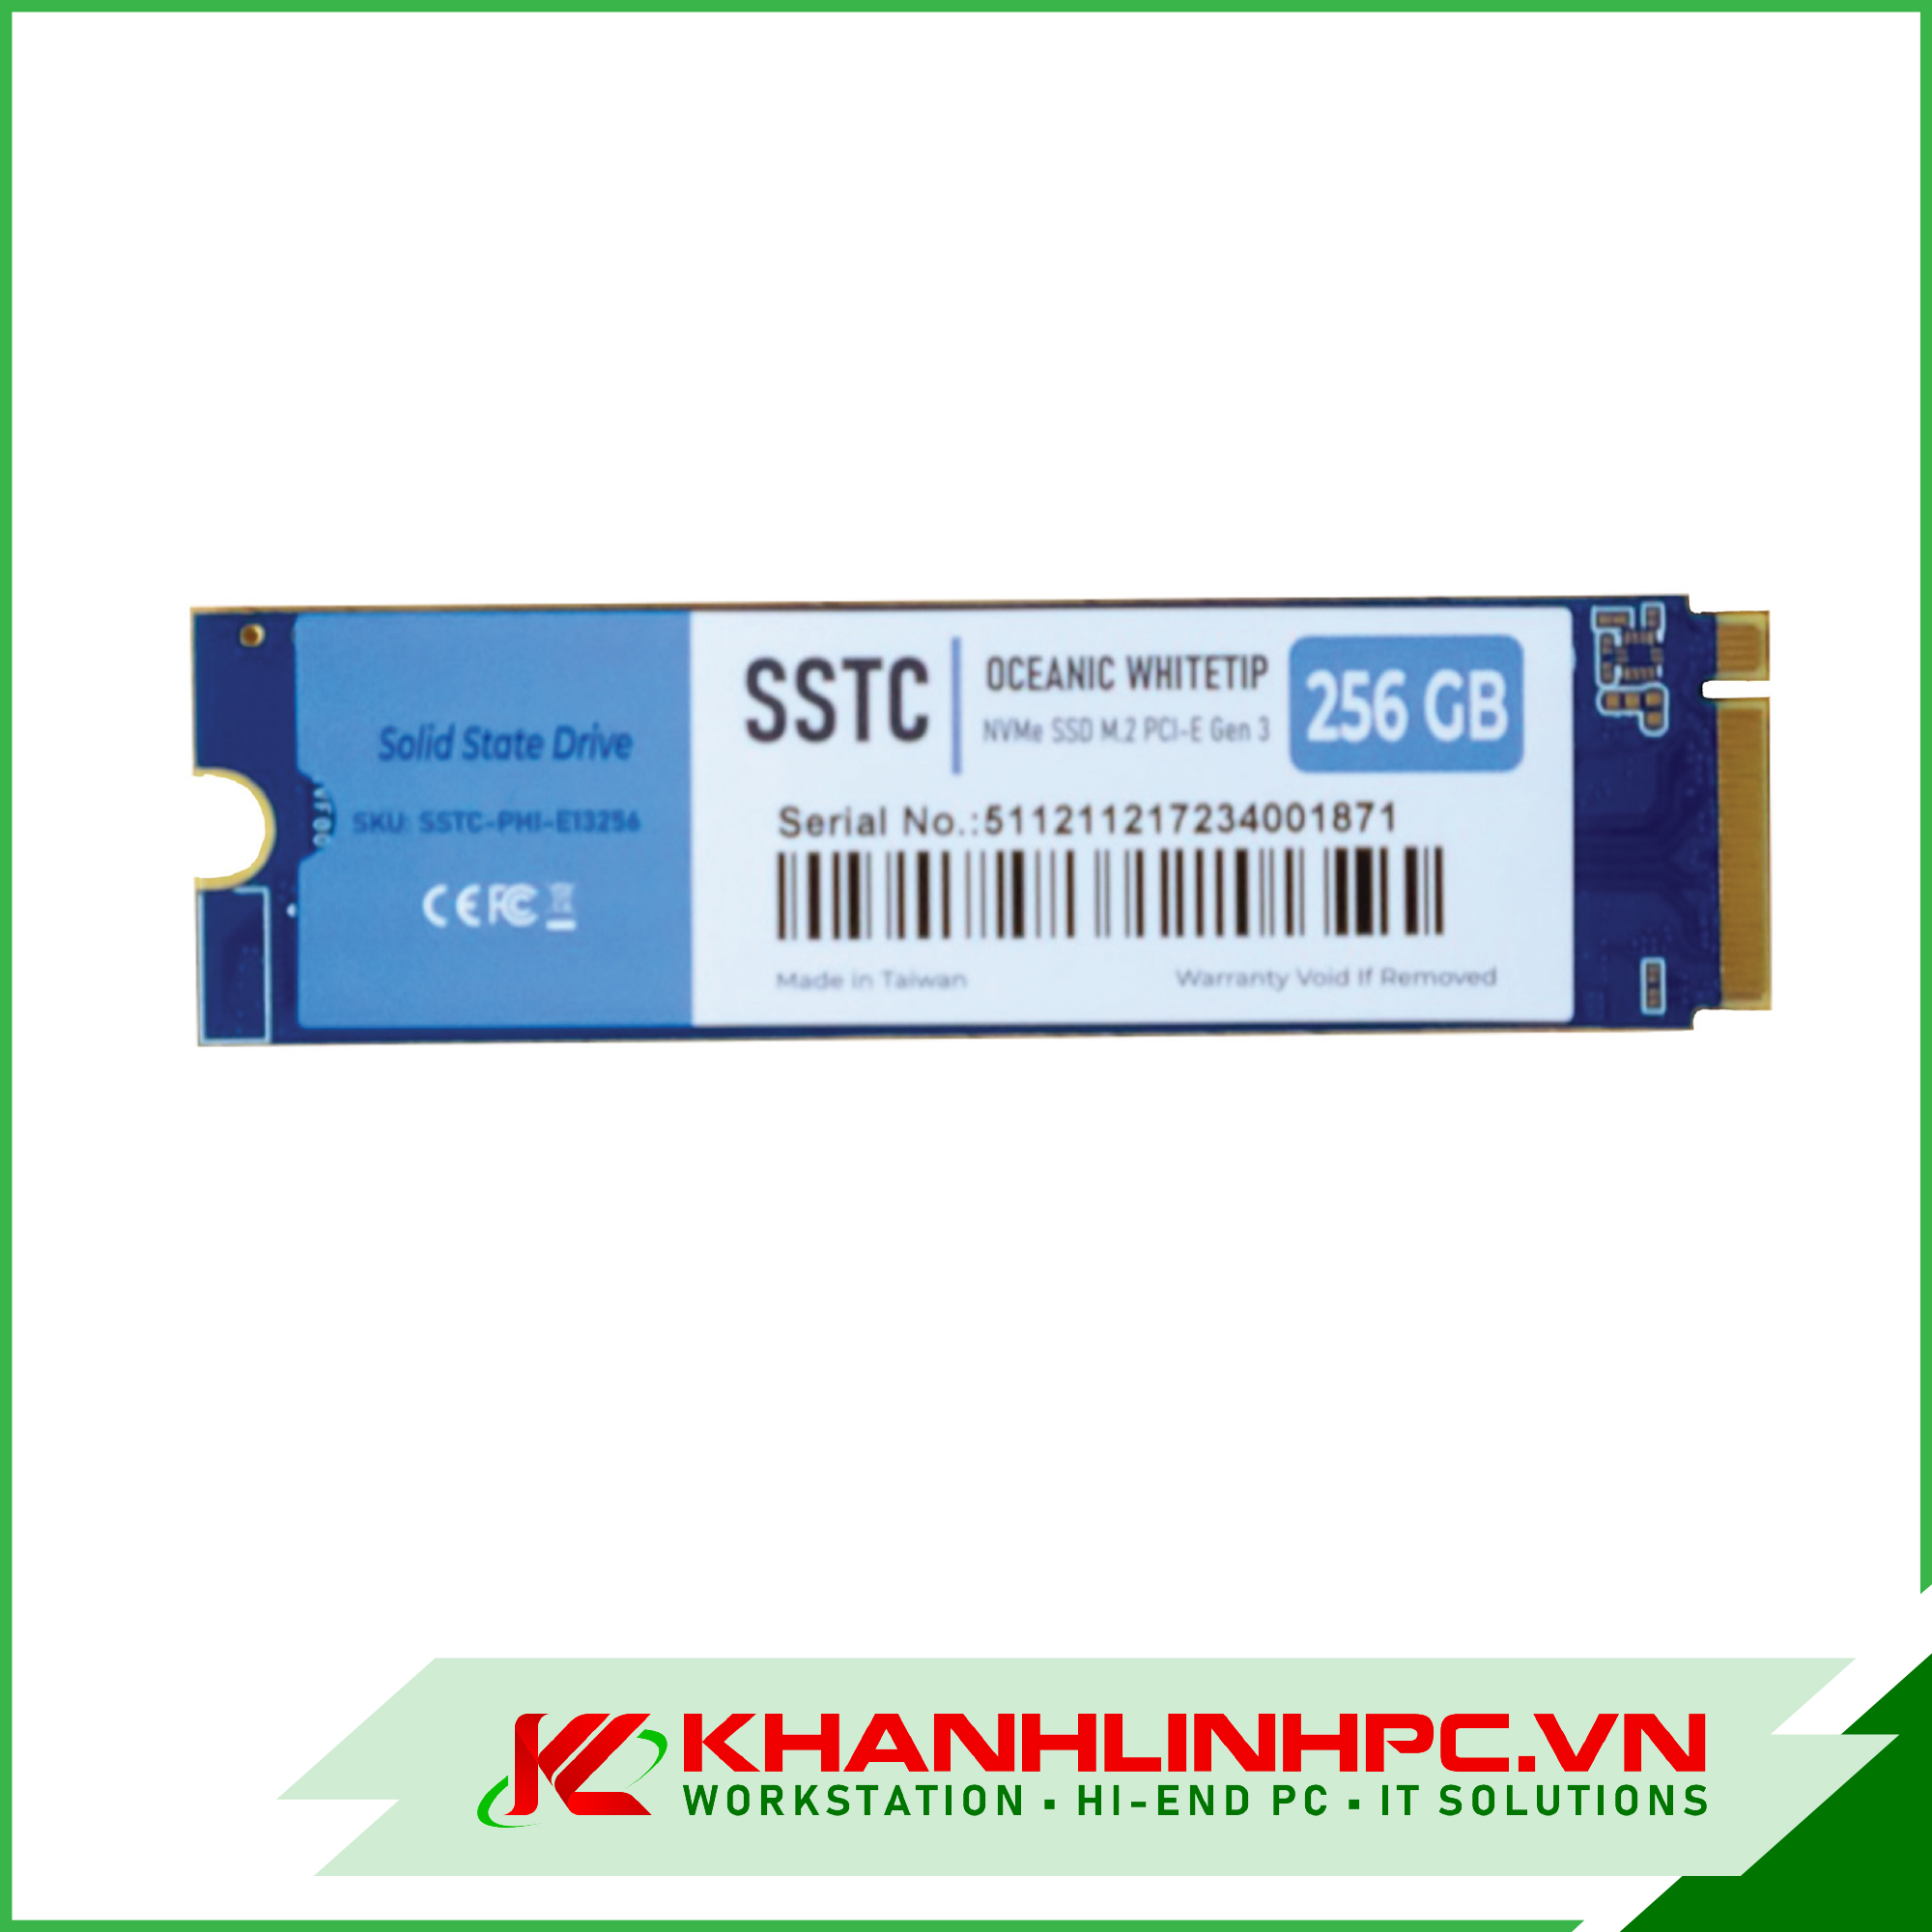 SSD 256GB SSTC OCEANIC Whitetip NVMe M.2 PCIe Gen 3